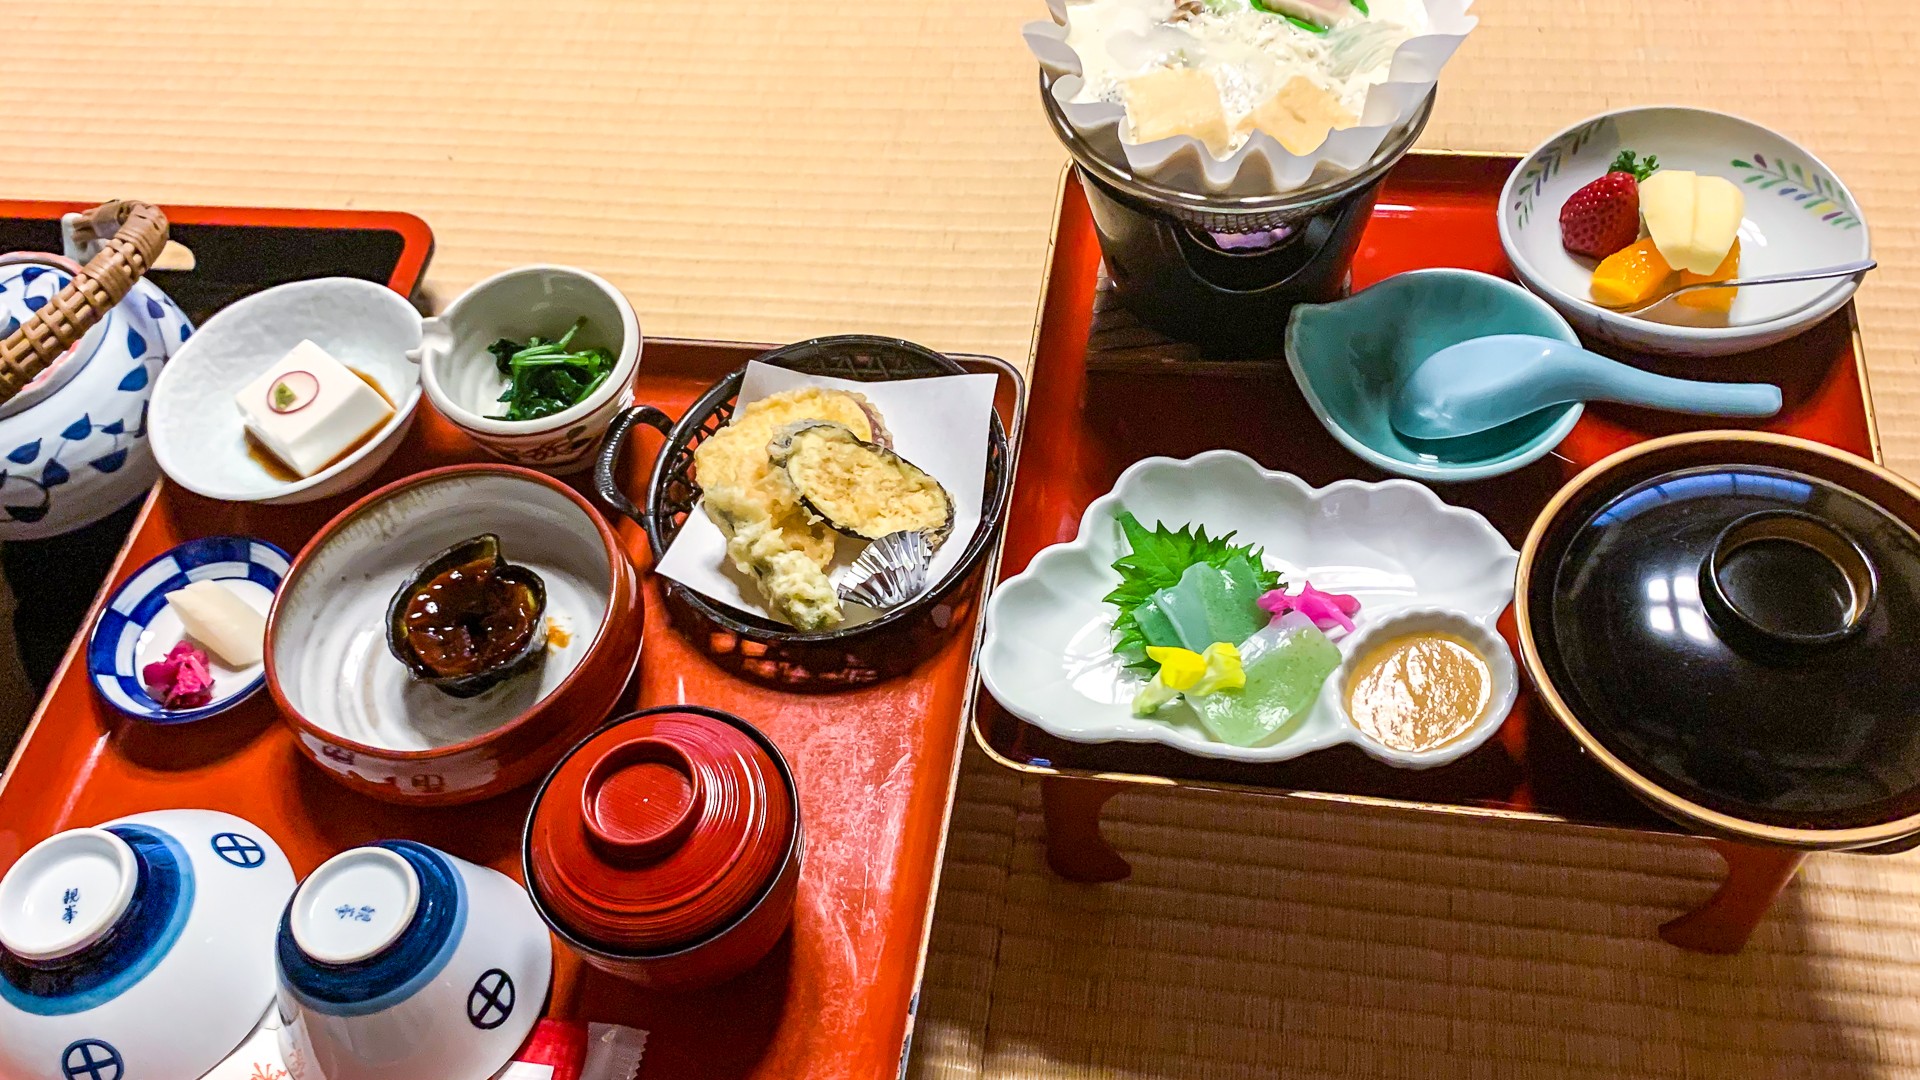 Easy Kappa Maki Recipe (Japanese Cucumber Sushi Roll) - Chef JA Cooks